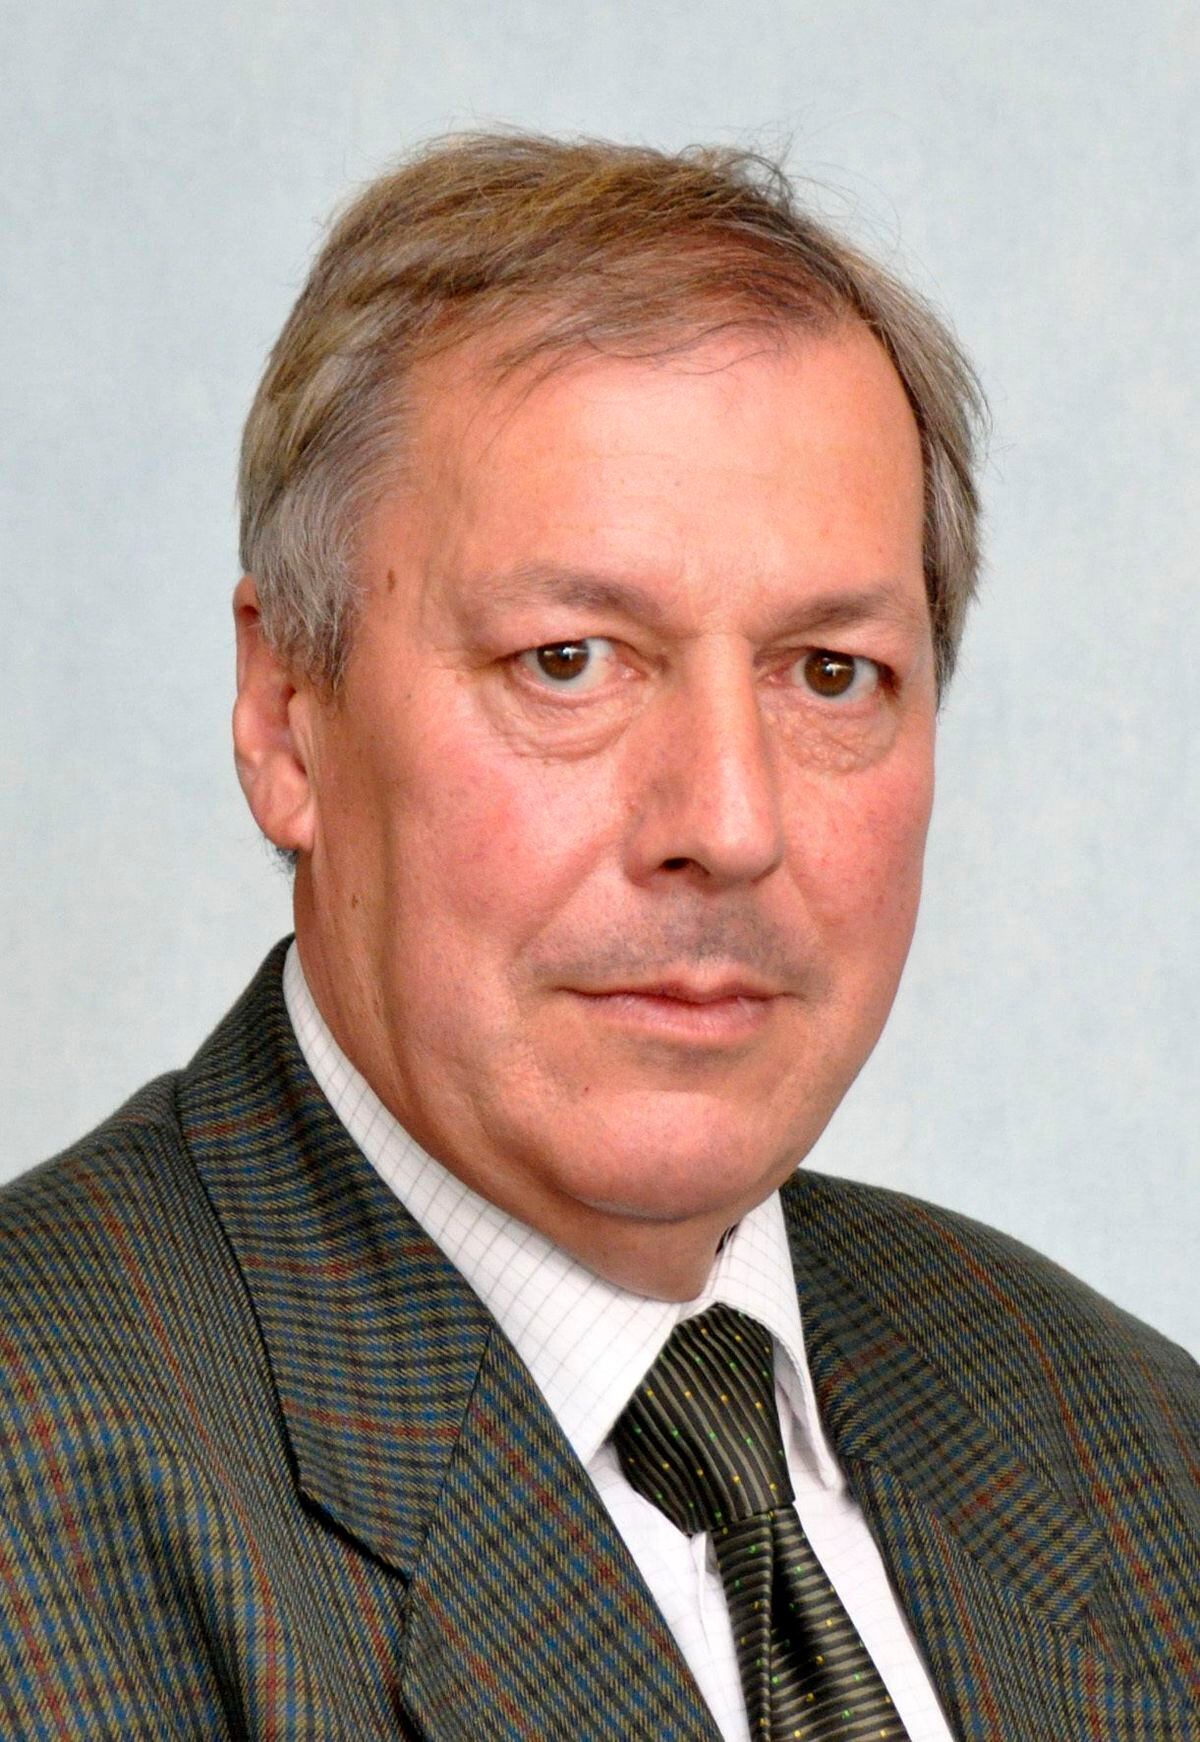 Councillor Steve Davenport